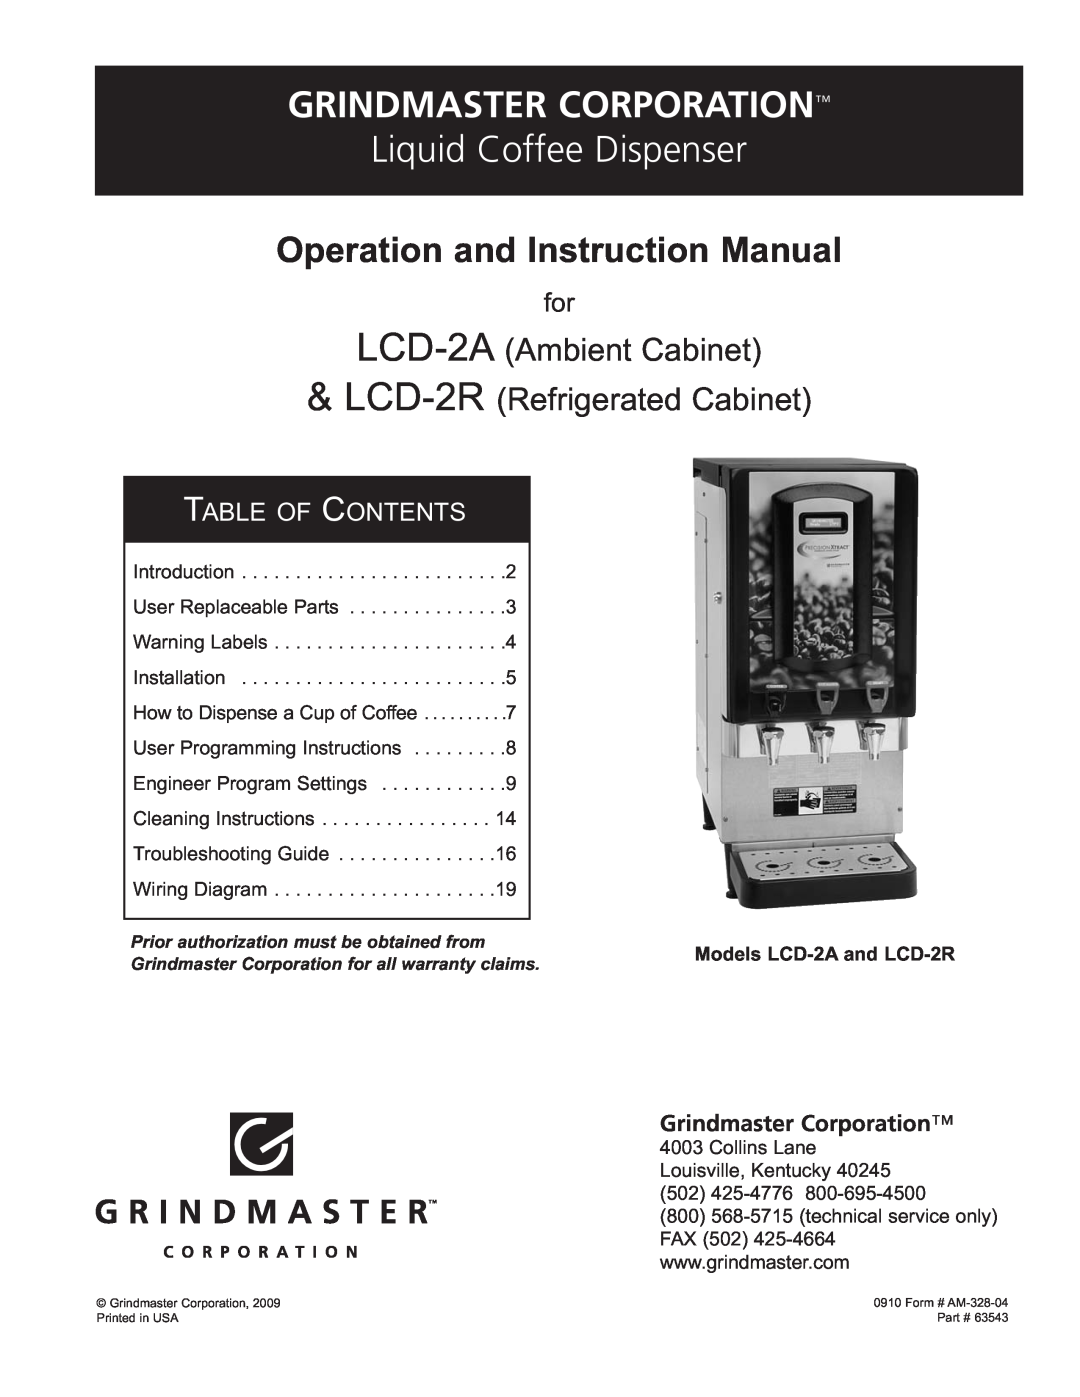 Grindmaster LCD-2R instruction manual Grindmaster Corporation, Liquid Coffee Dispenser, Operation and Instruction Manual 